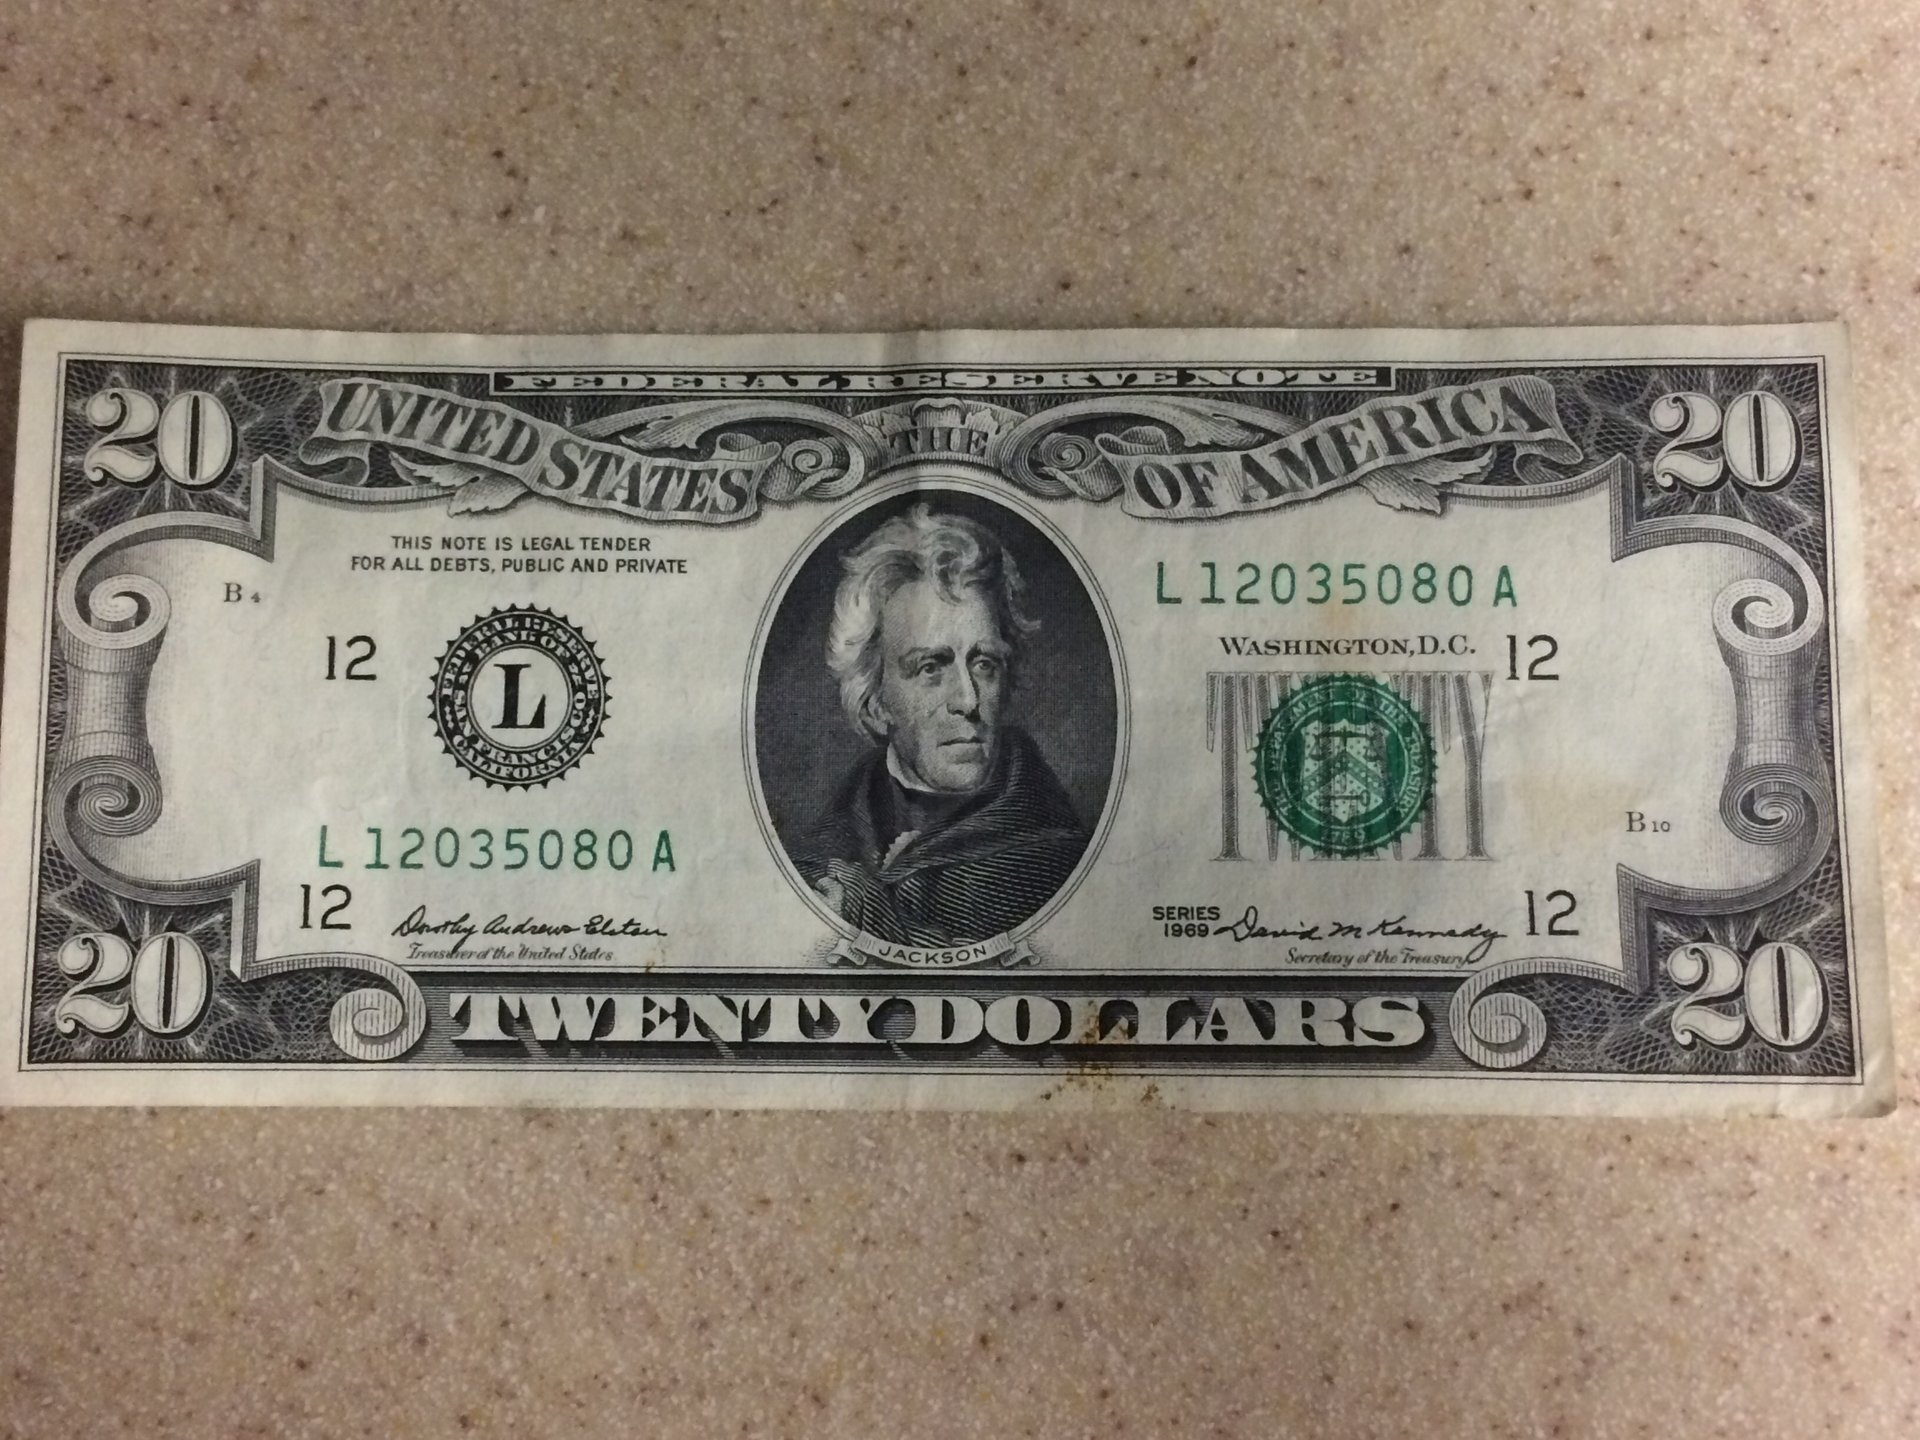 1969 20 dollar bill Real or fake? | Coin Talk